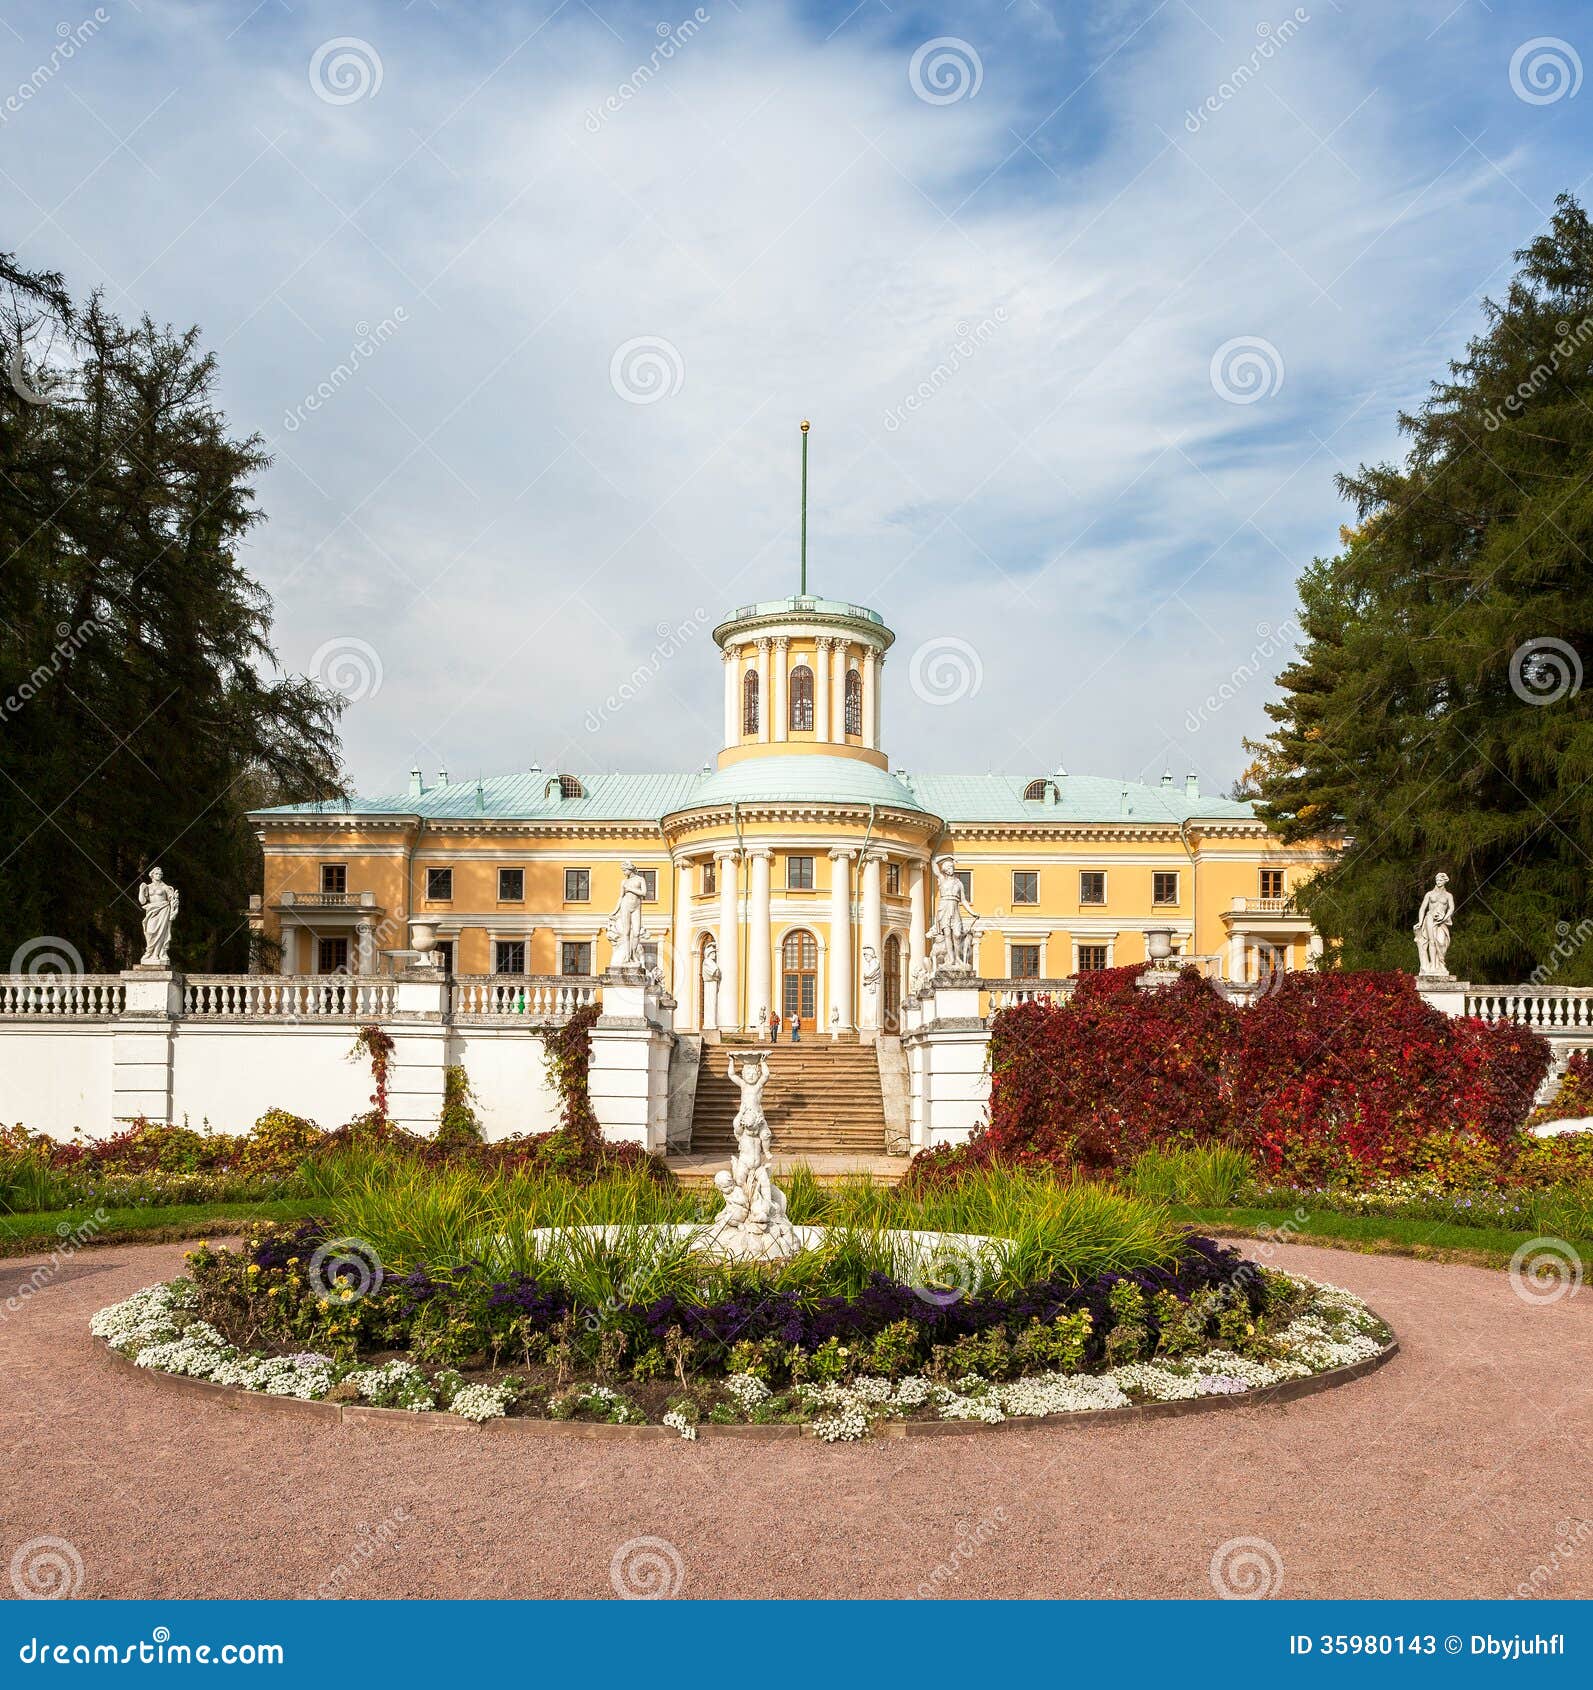 Museum-Estate Of Arkhangelskoye. Stock Image - Image of nobleman ...
